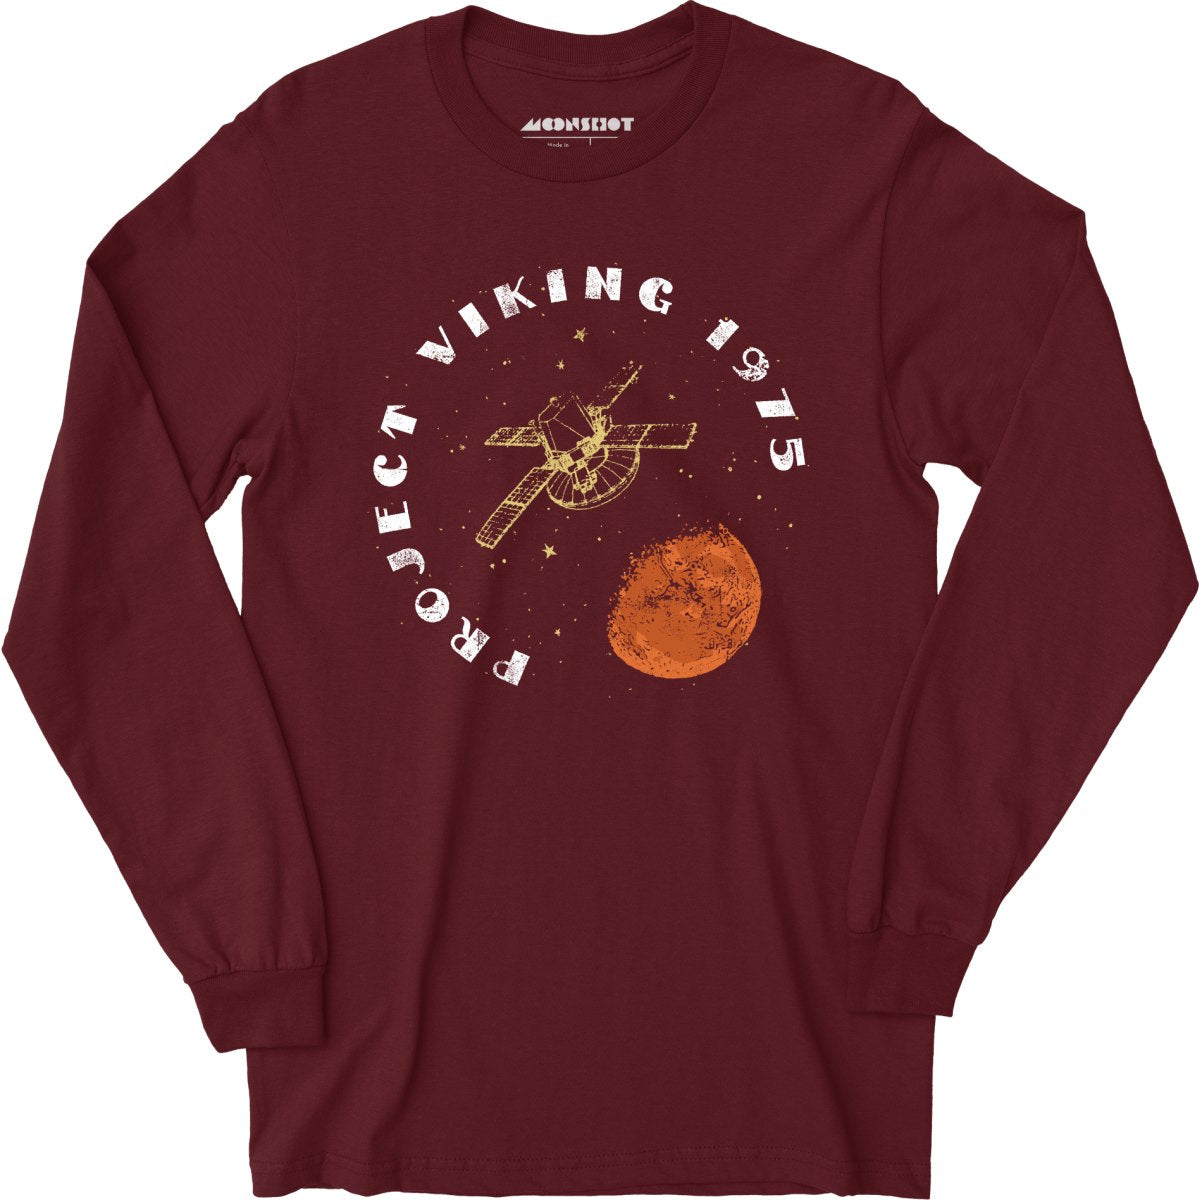 Project Viking 1975 - Long Sleeve T-Shirt